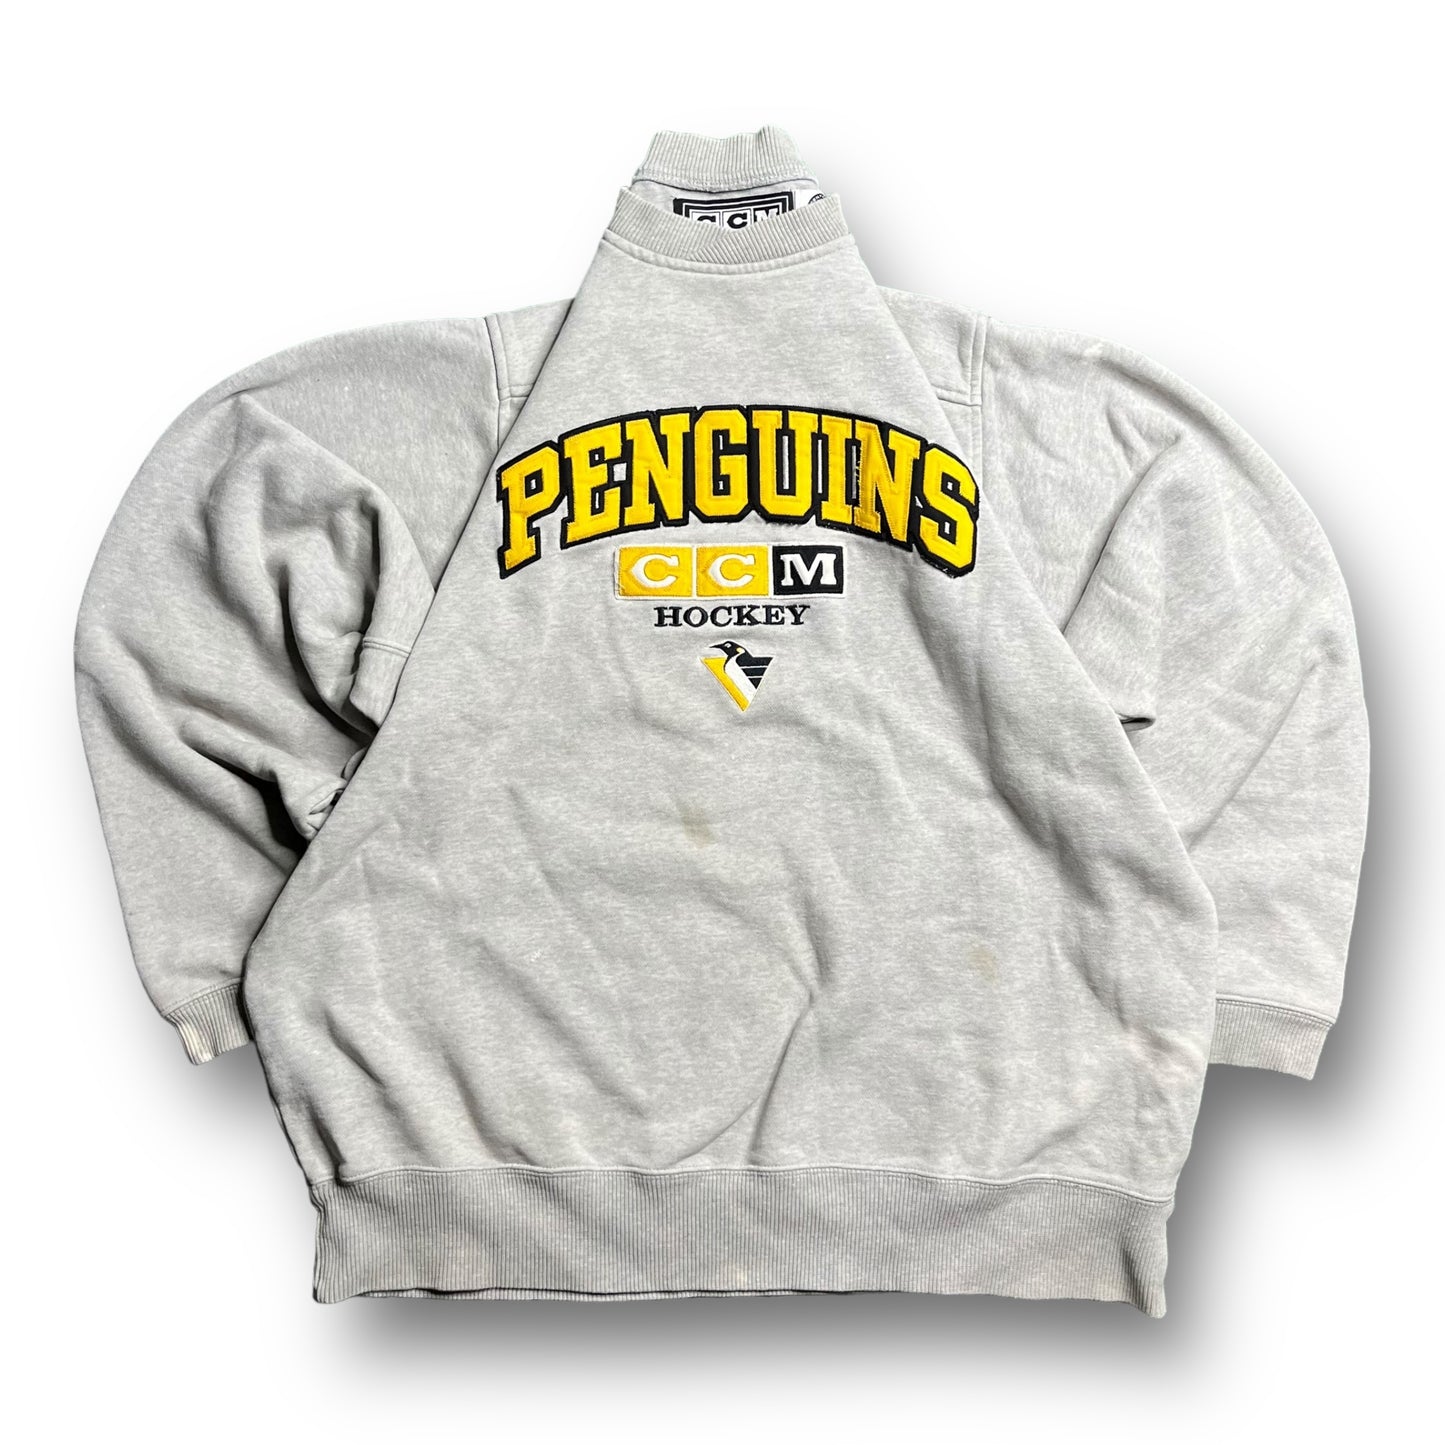 00s Pittsburg Penguins Crewneck (M)